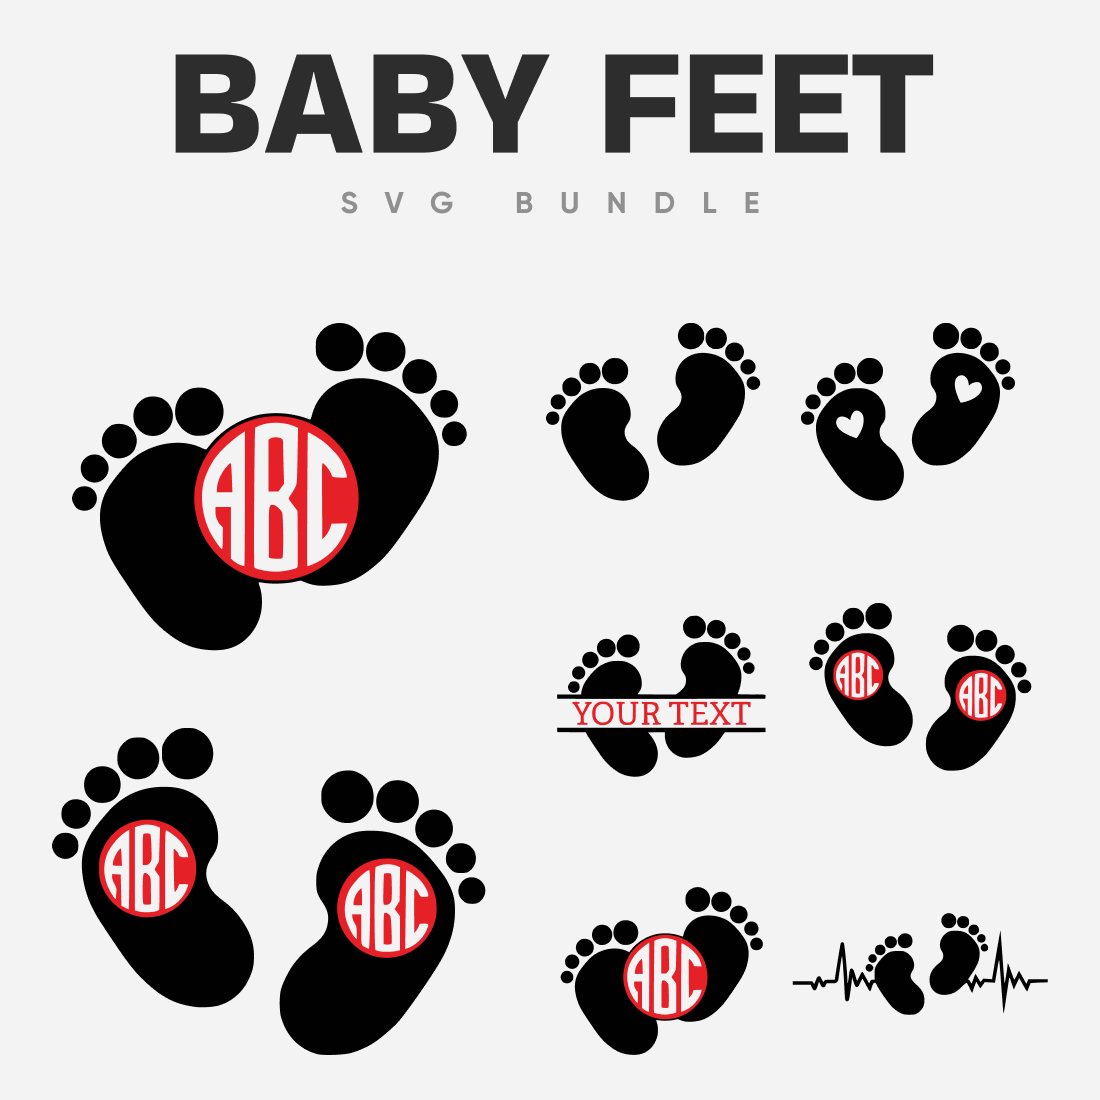 SVG bundle baby feet.